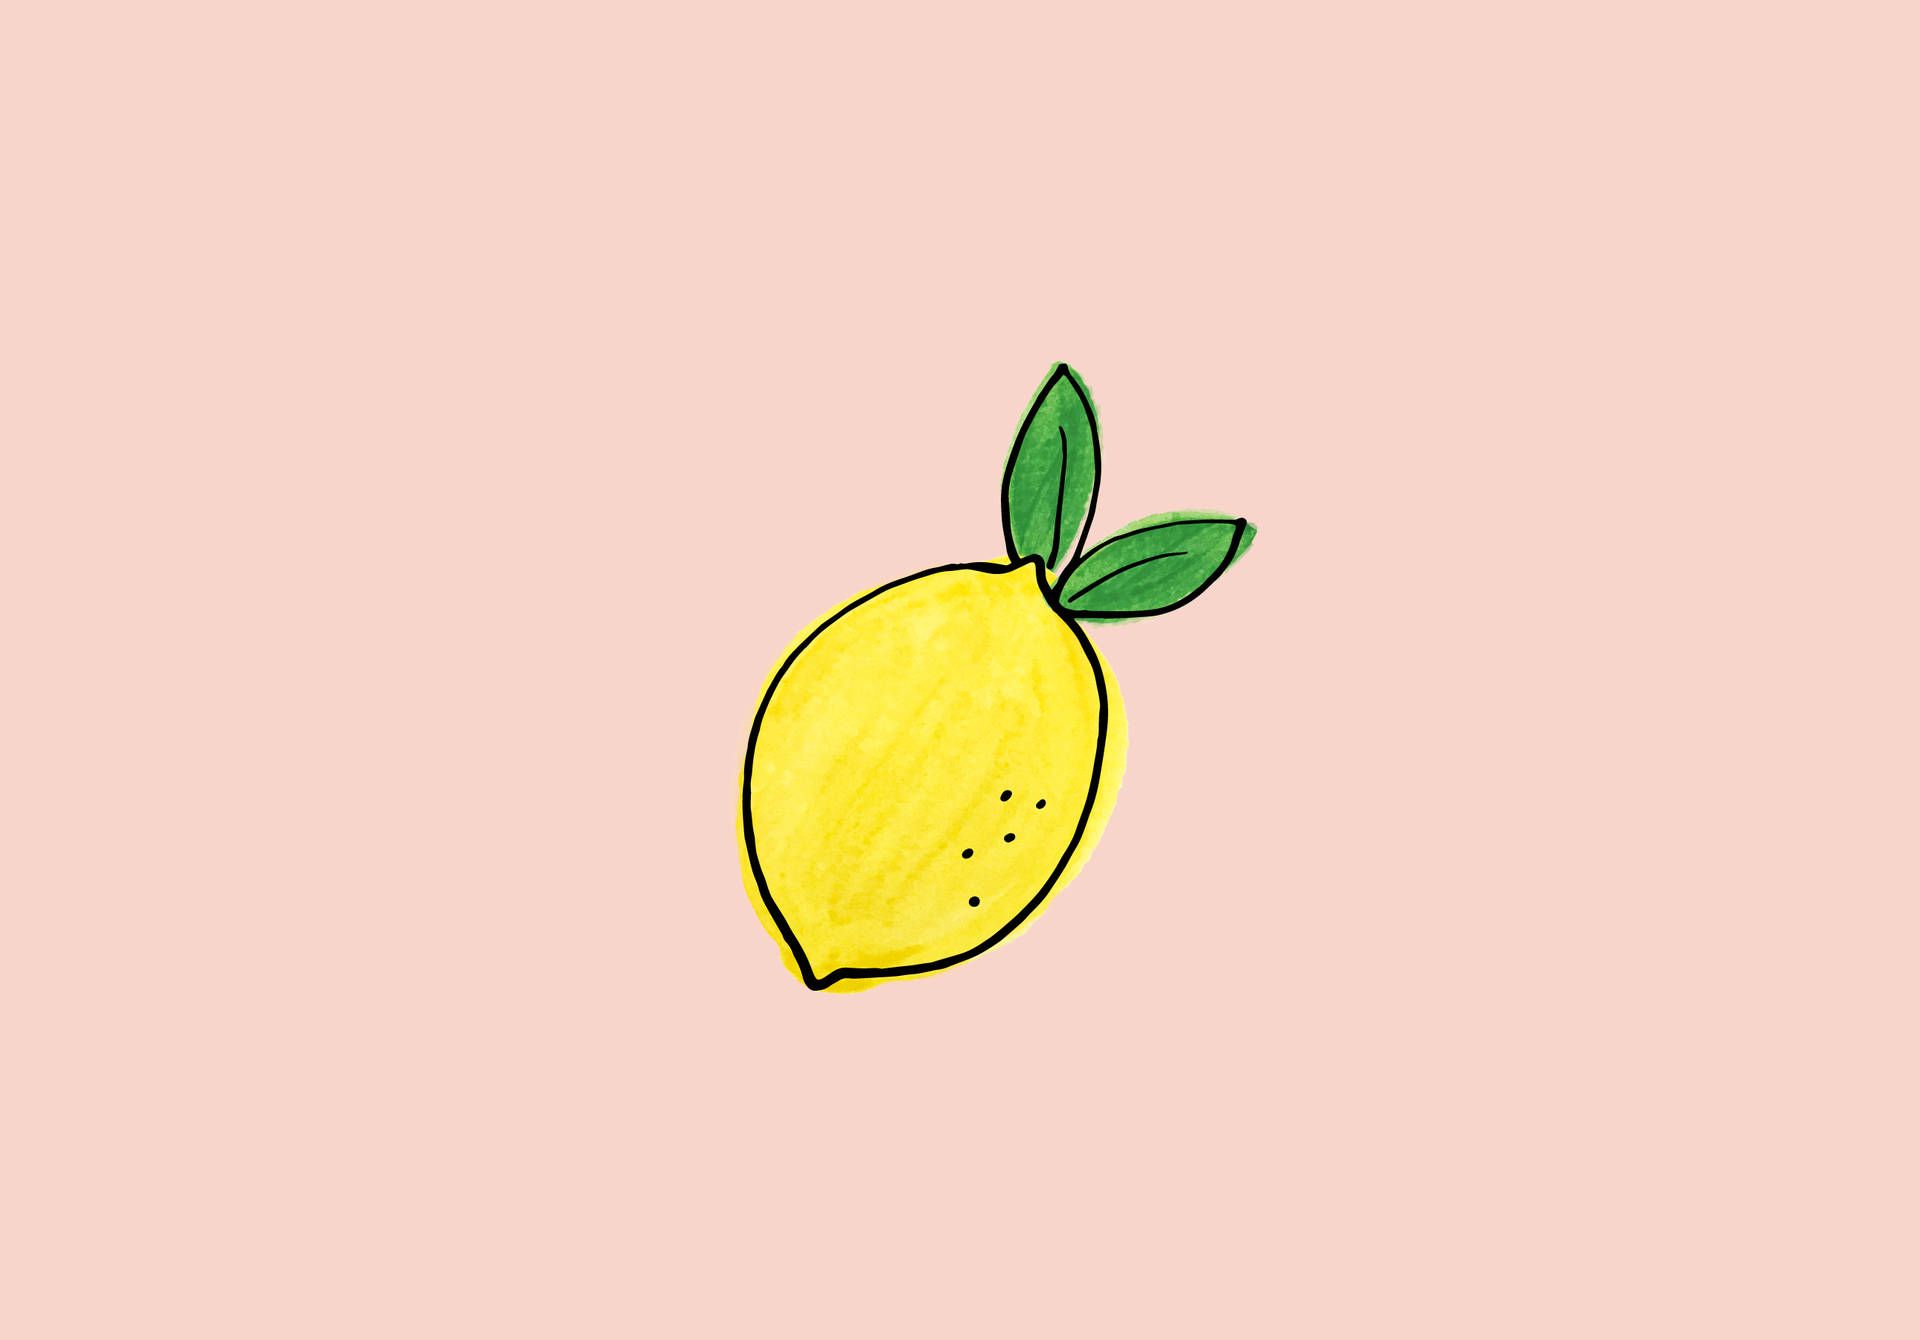 A lemon on pink background - Lemon, fruit